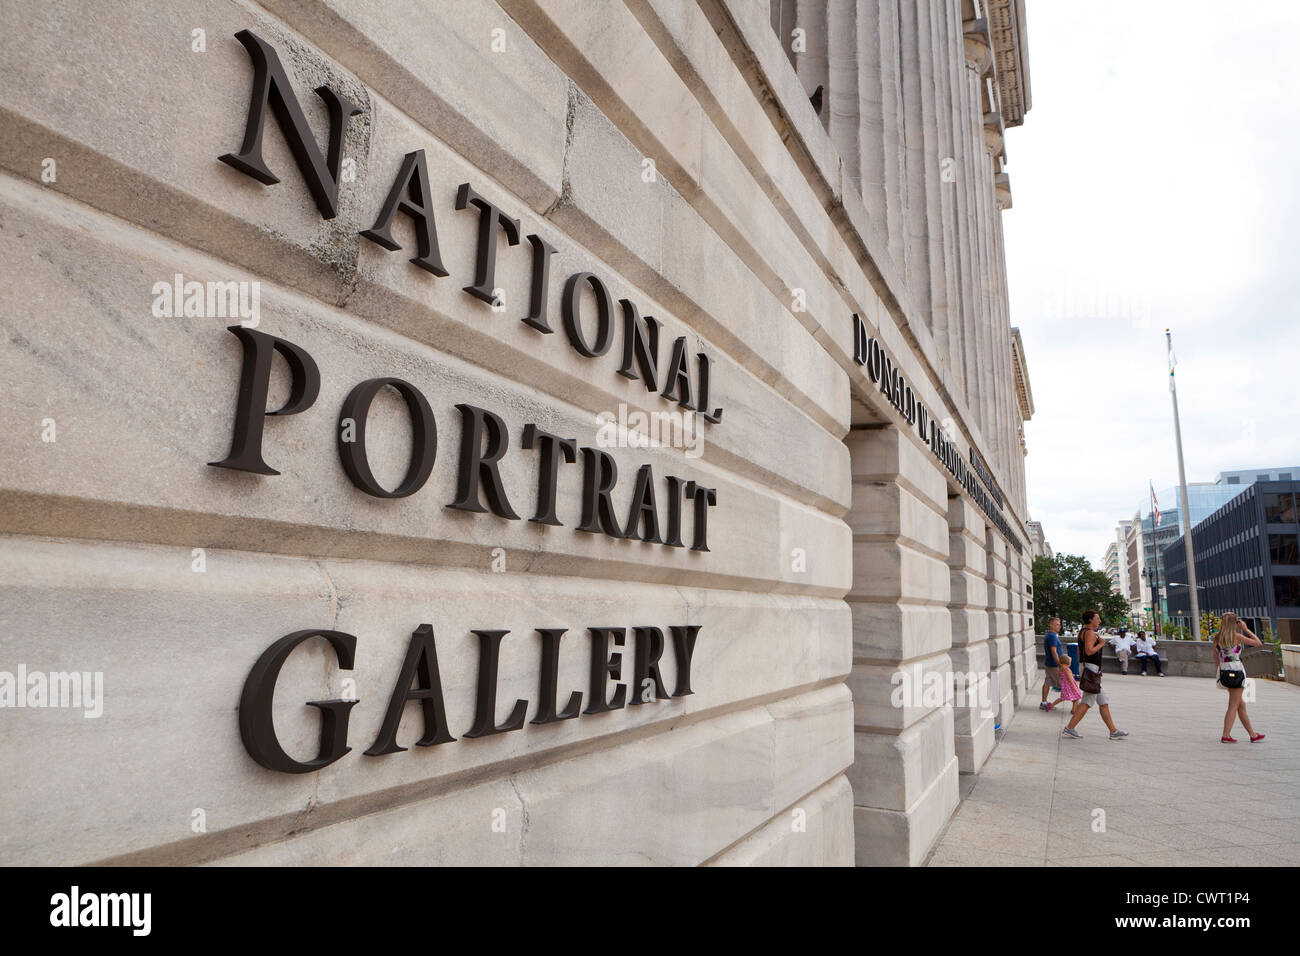 National Portrait Gallery - Washington, DC USA Stock Photo